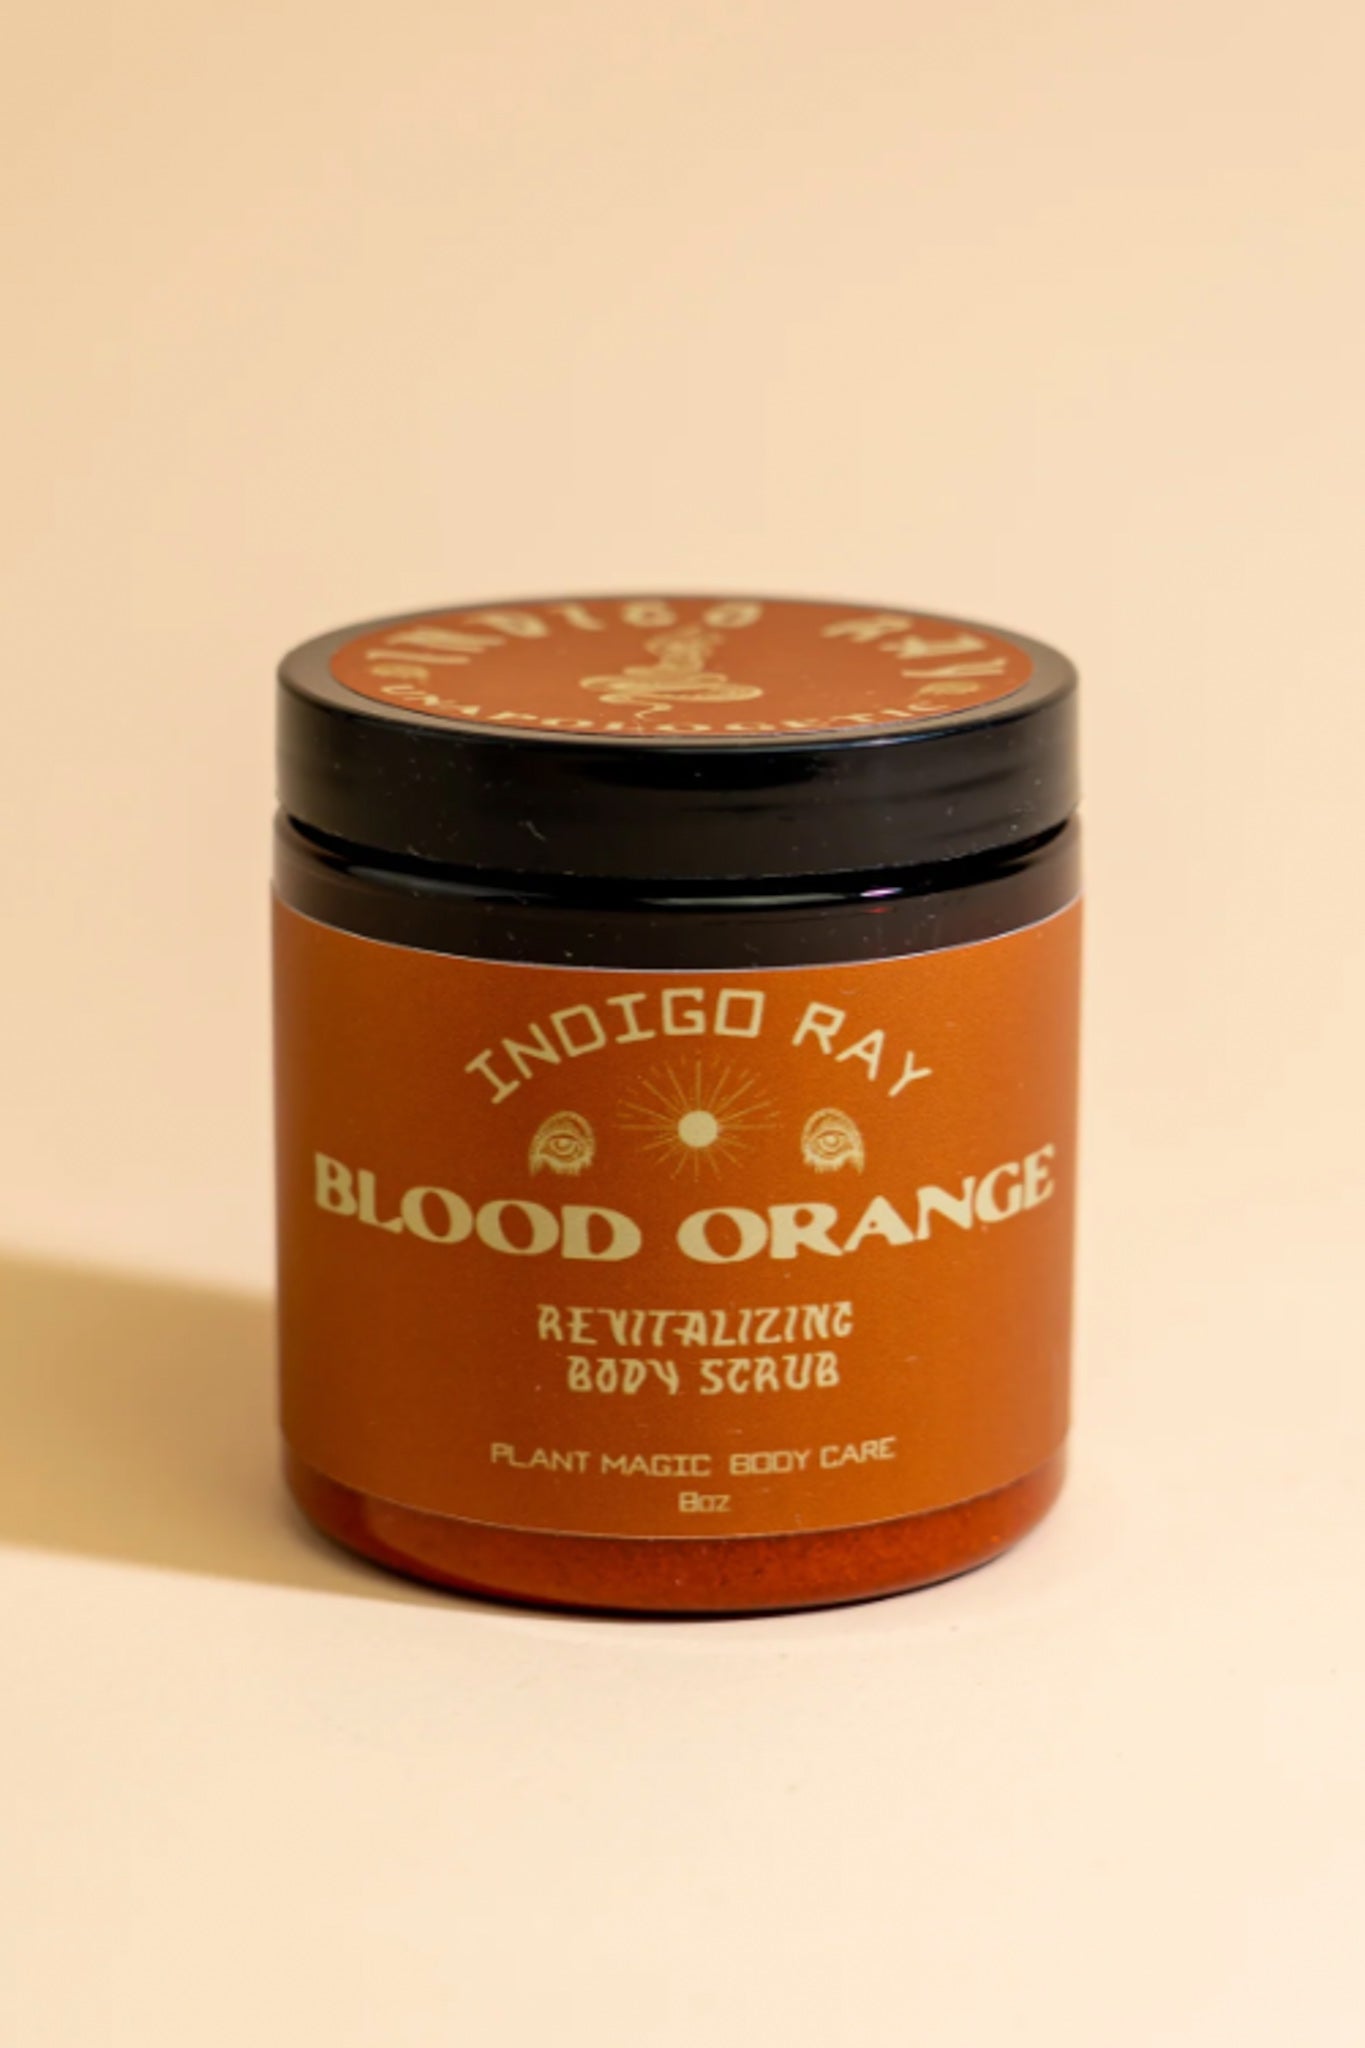 Blood Orange Body Scrub